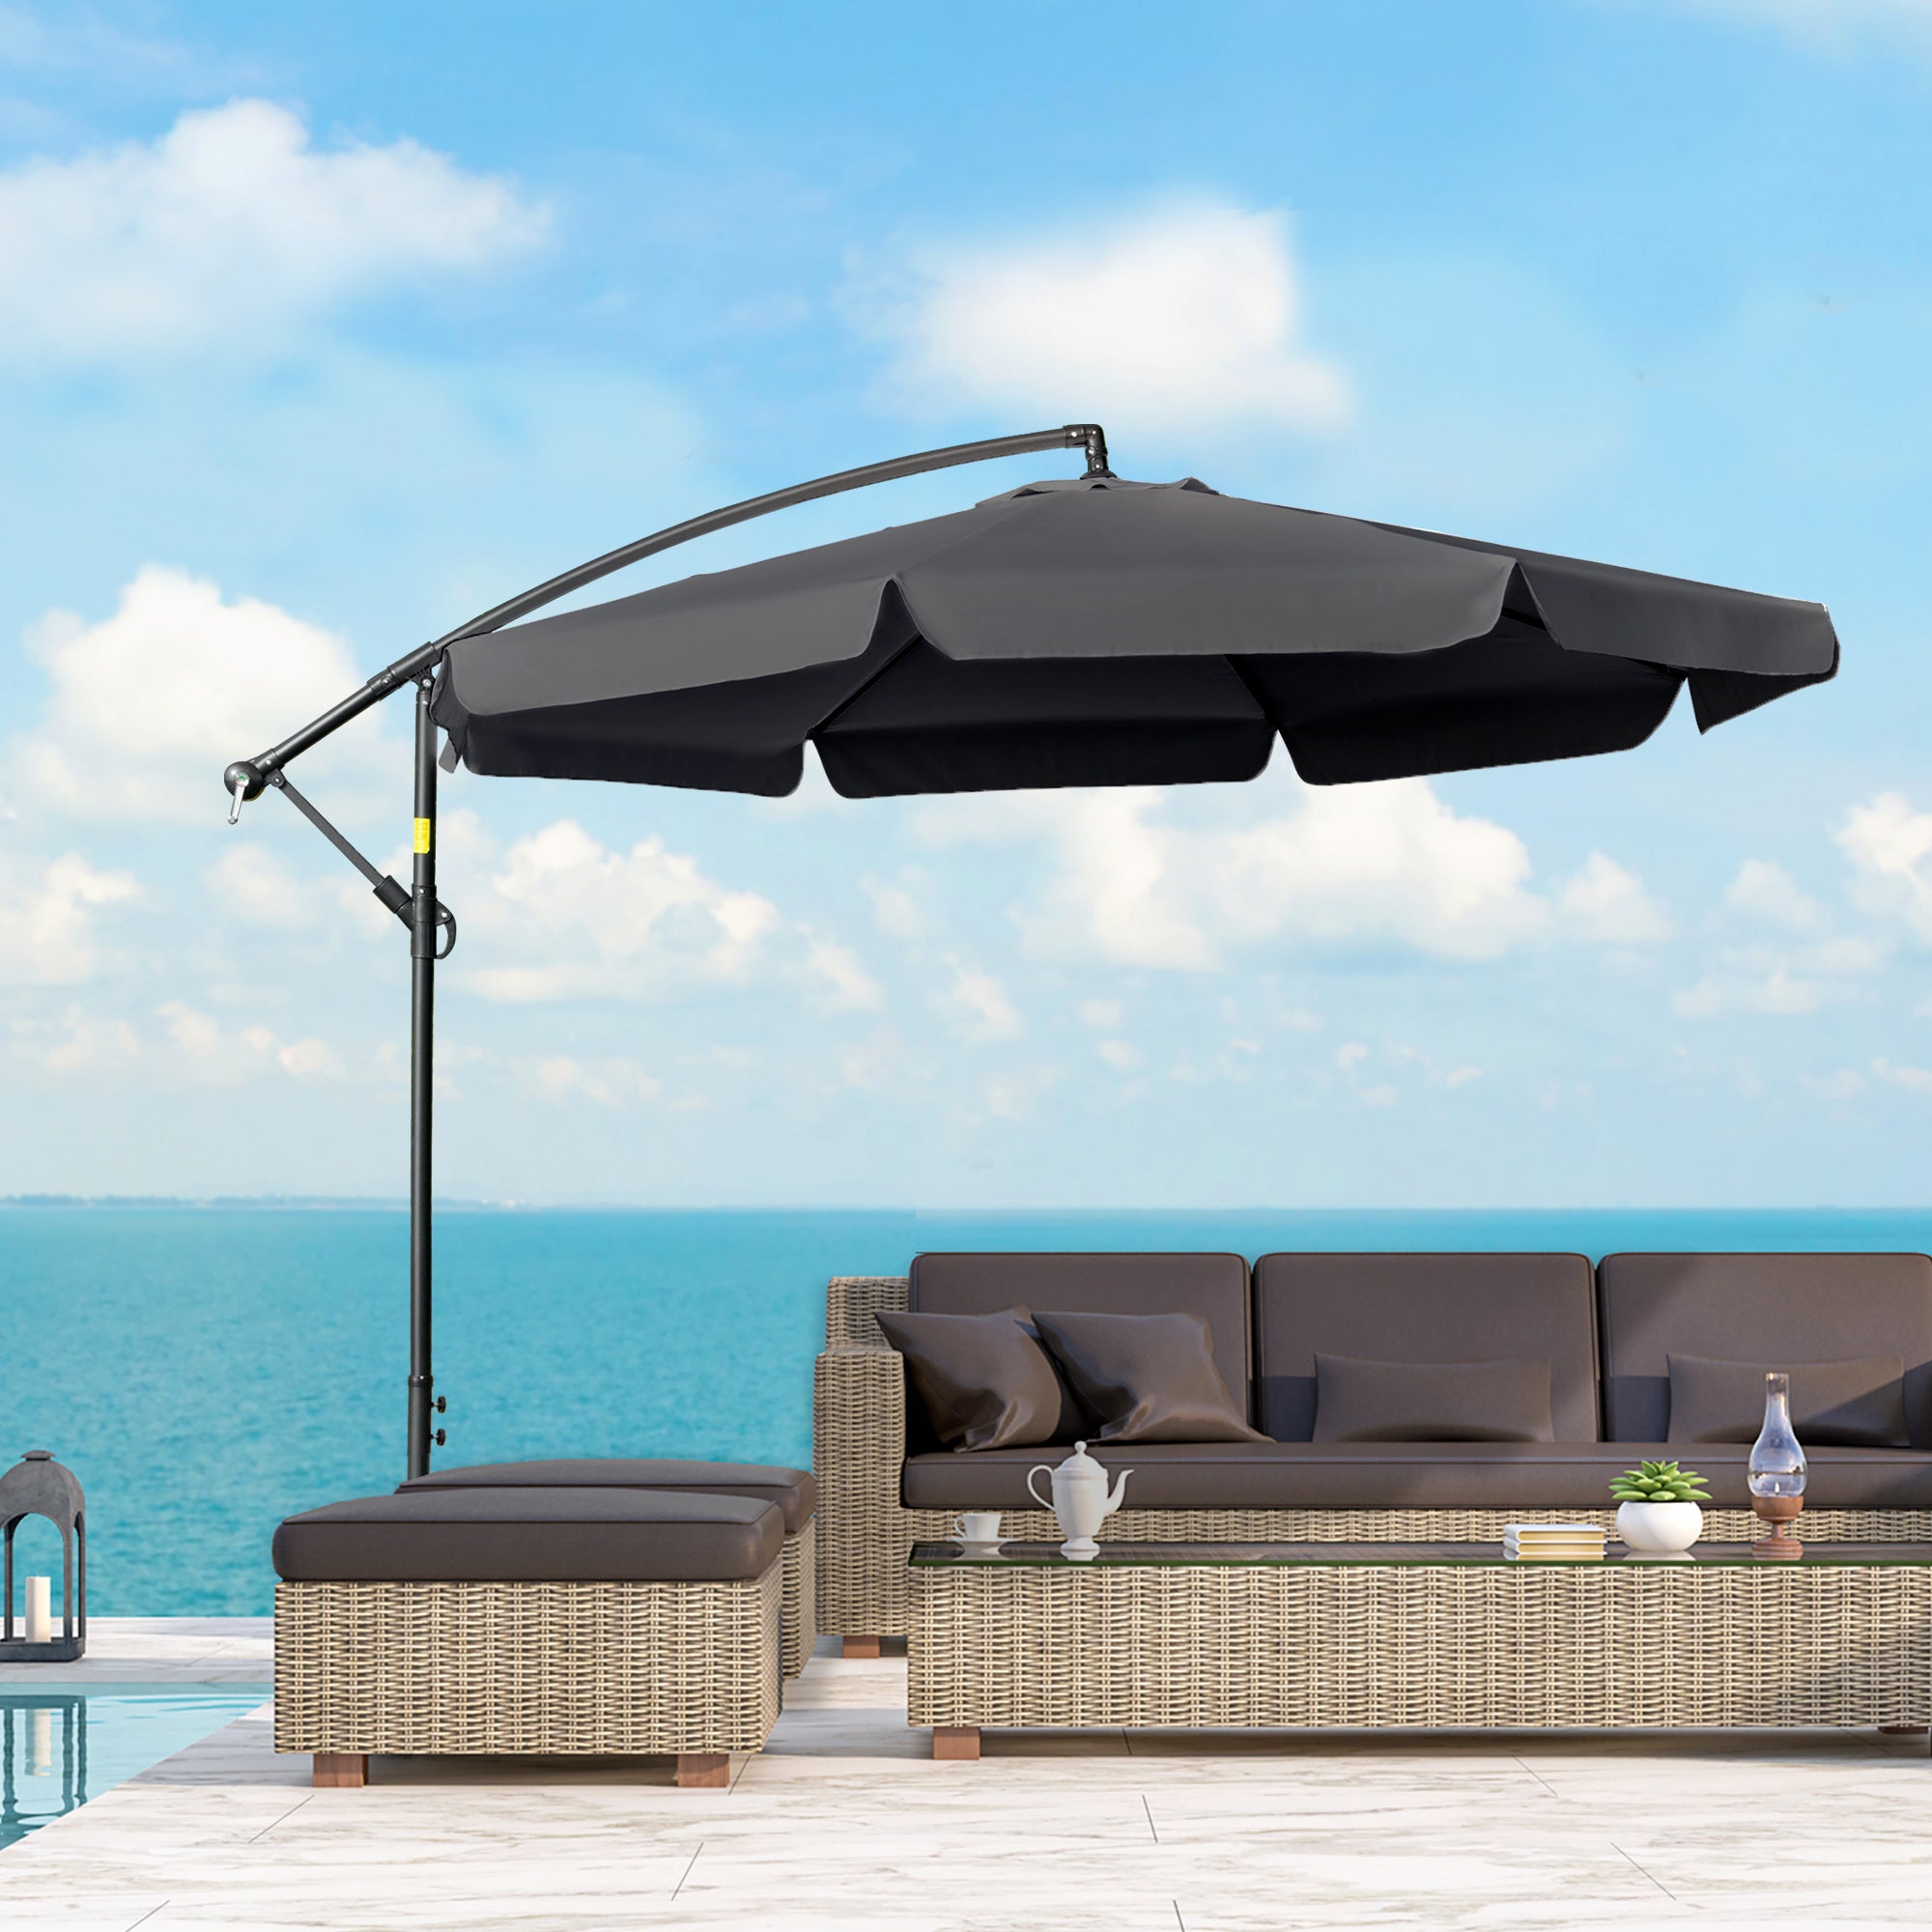 2.7m Banana Parasol Cantilever Umbrella with Crank Handle and Cross Base for Outdoor, Hanging Sun Shade, Black-1